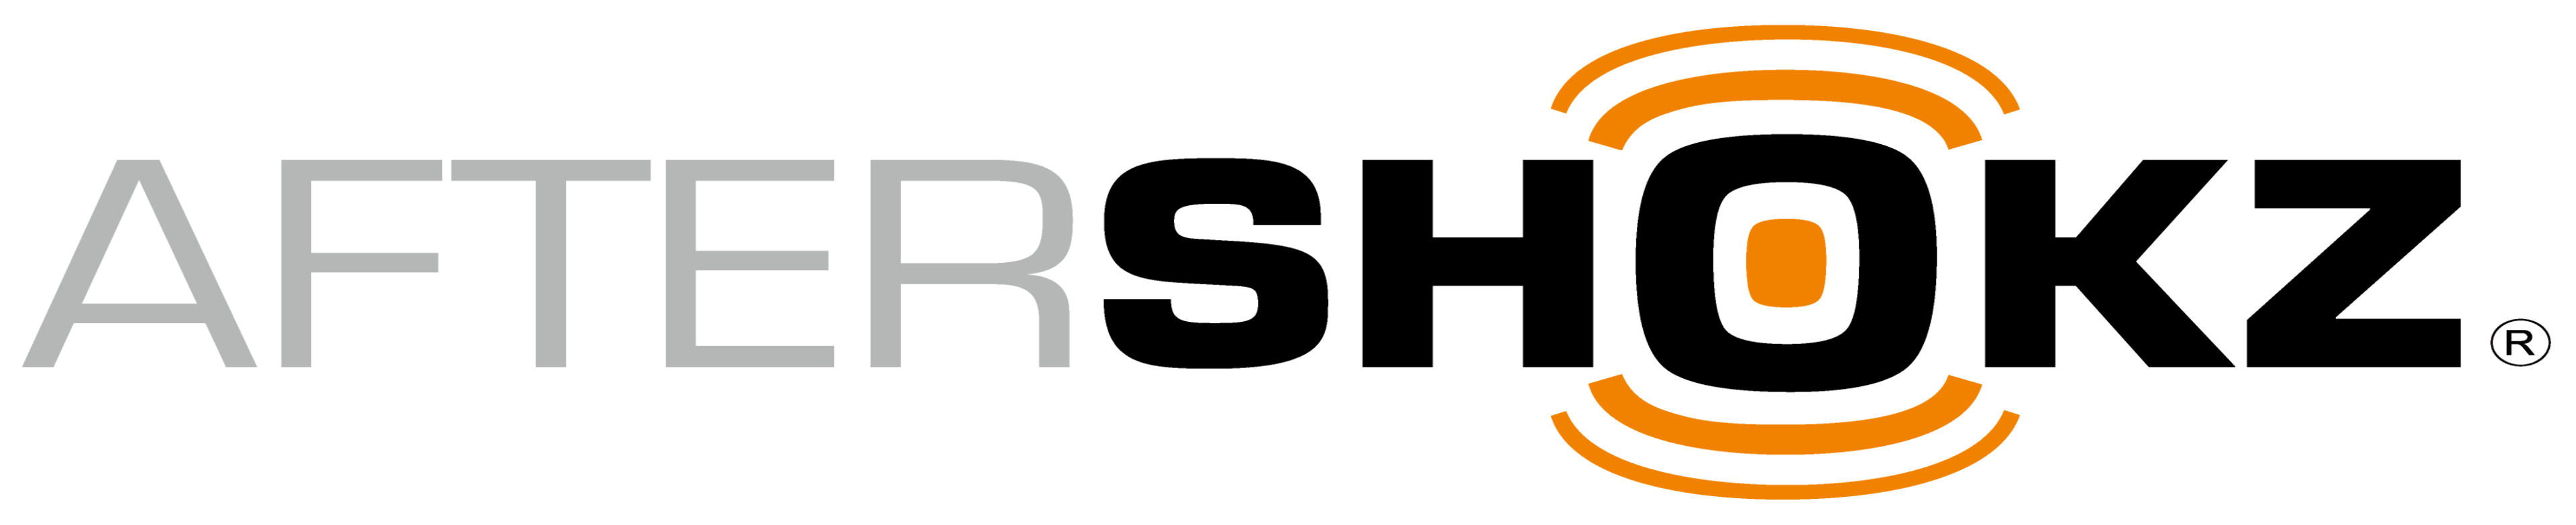 AfterShokz logo